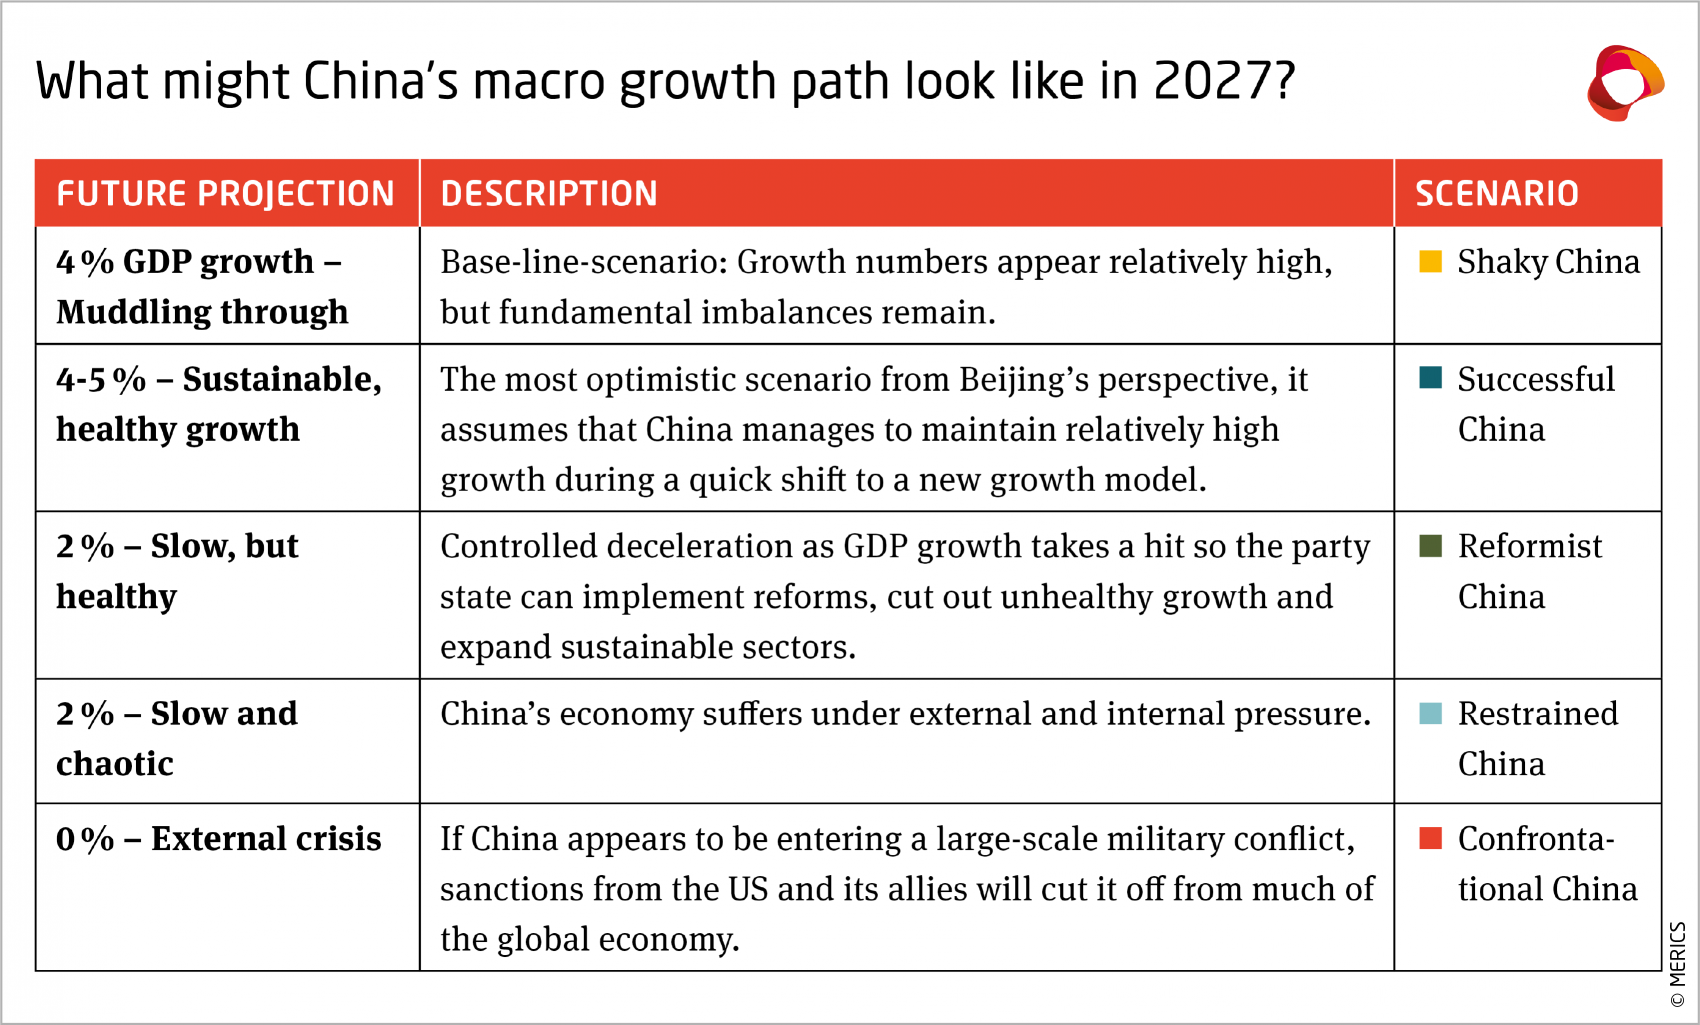 China's macro-growth path